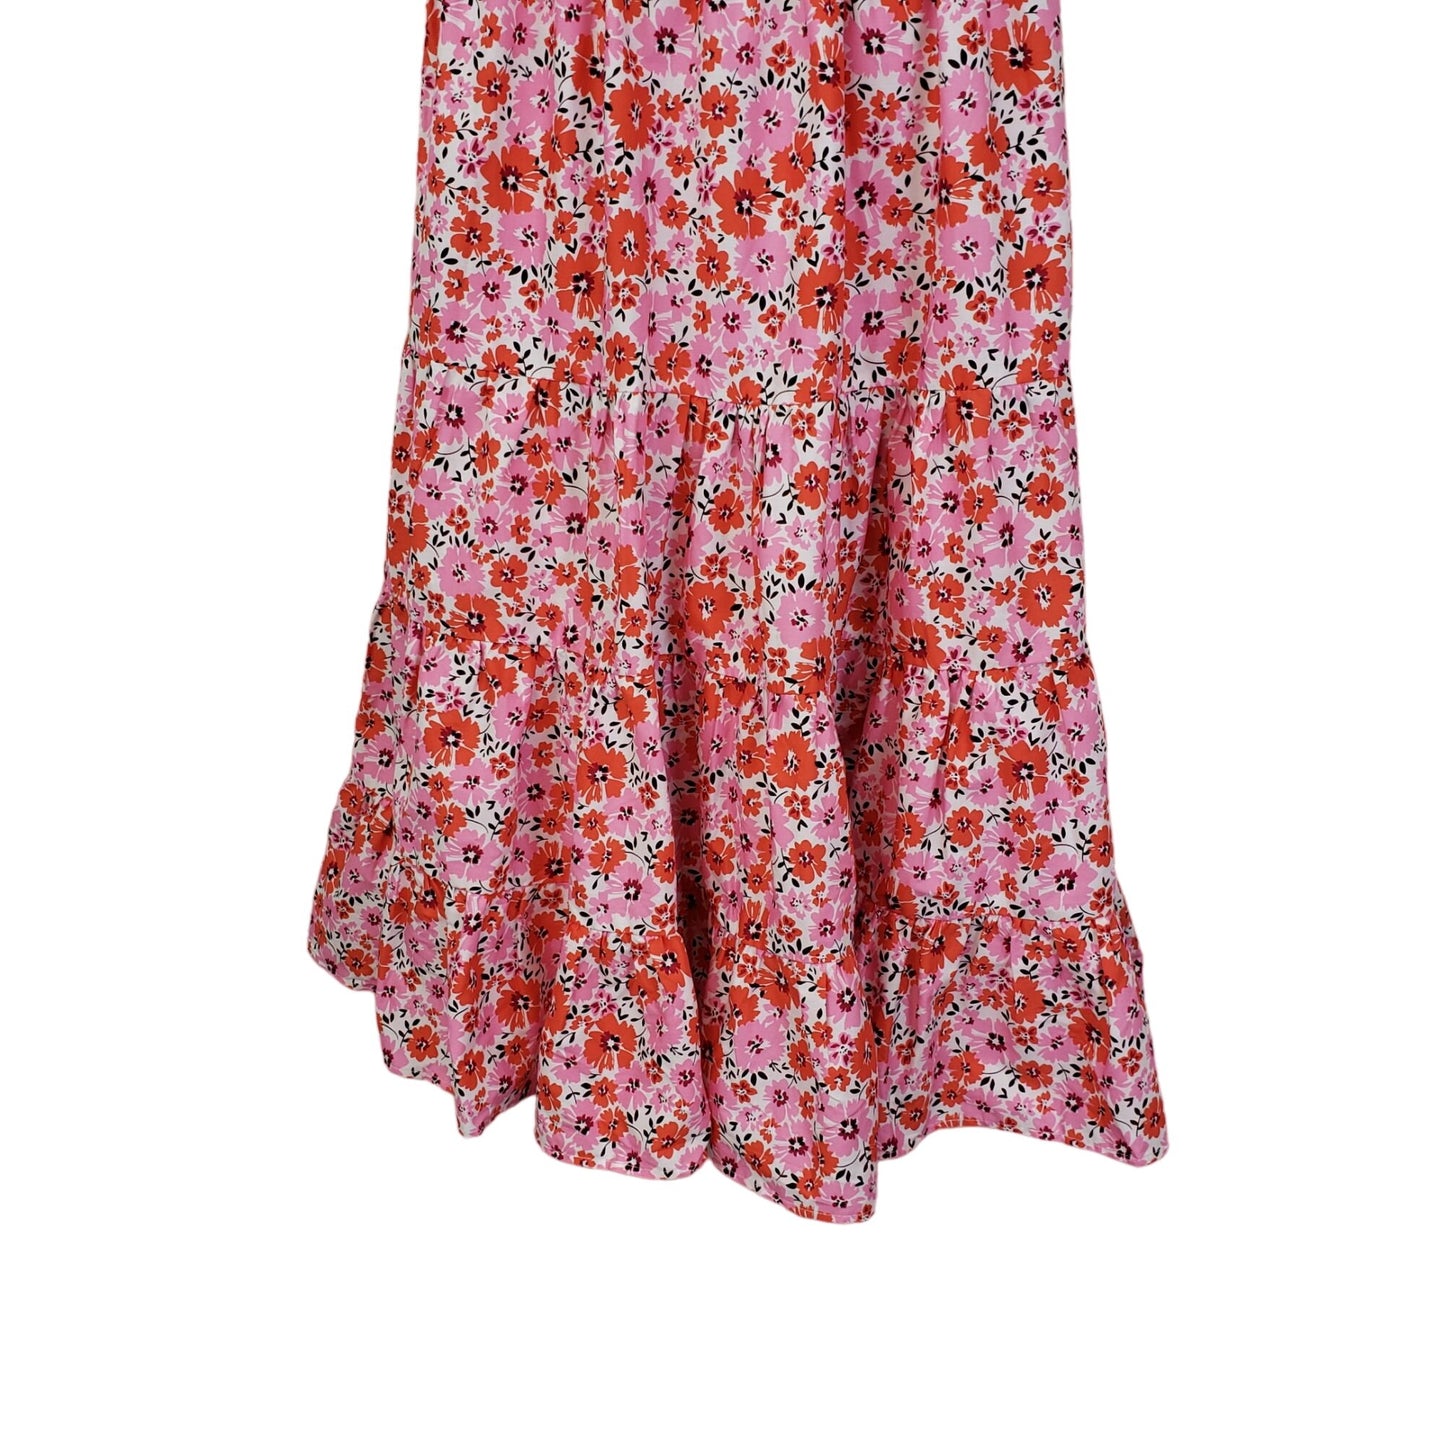 NWOT Yumi Kim Floral Smocked Tiered Hem Dress Size Small